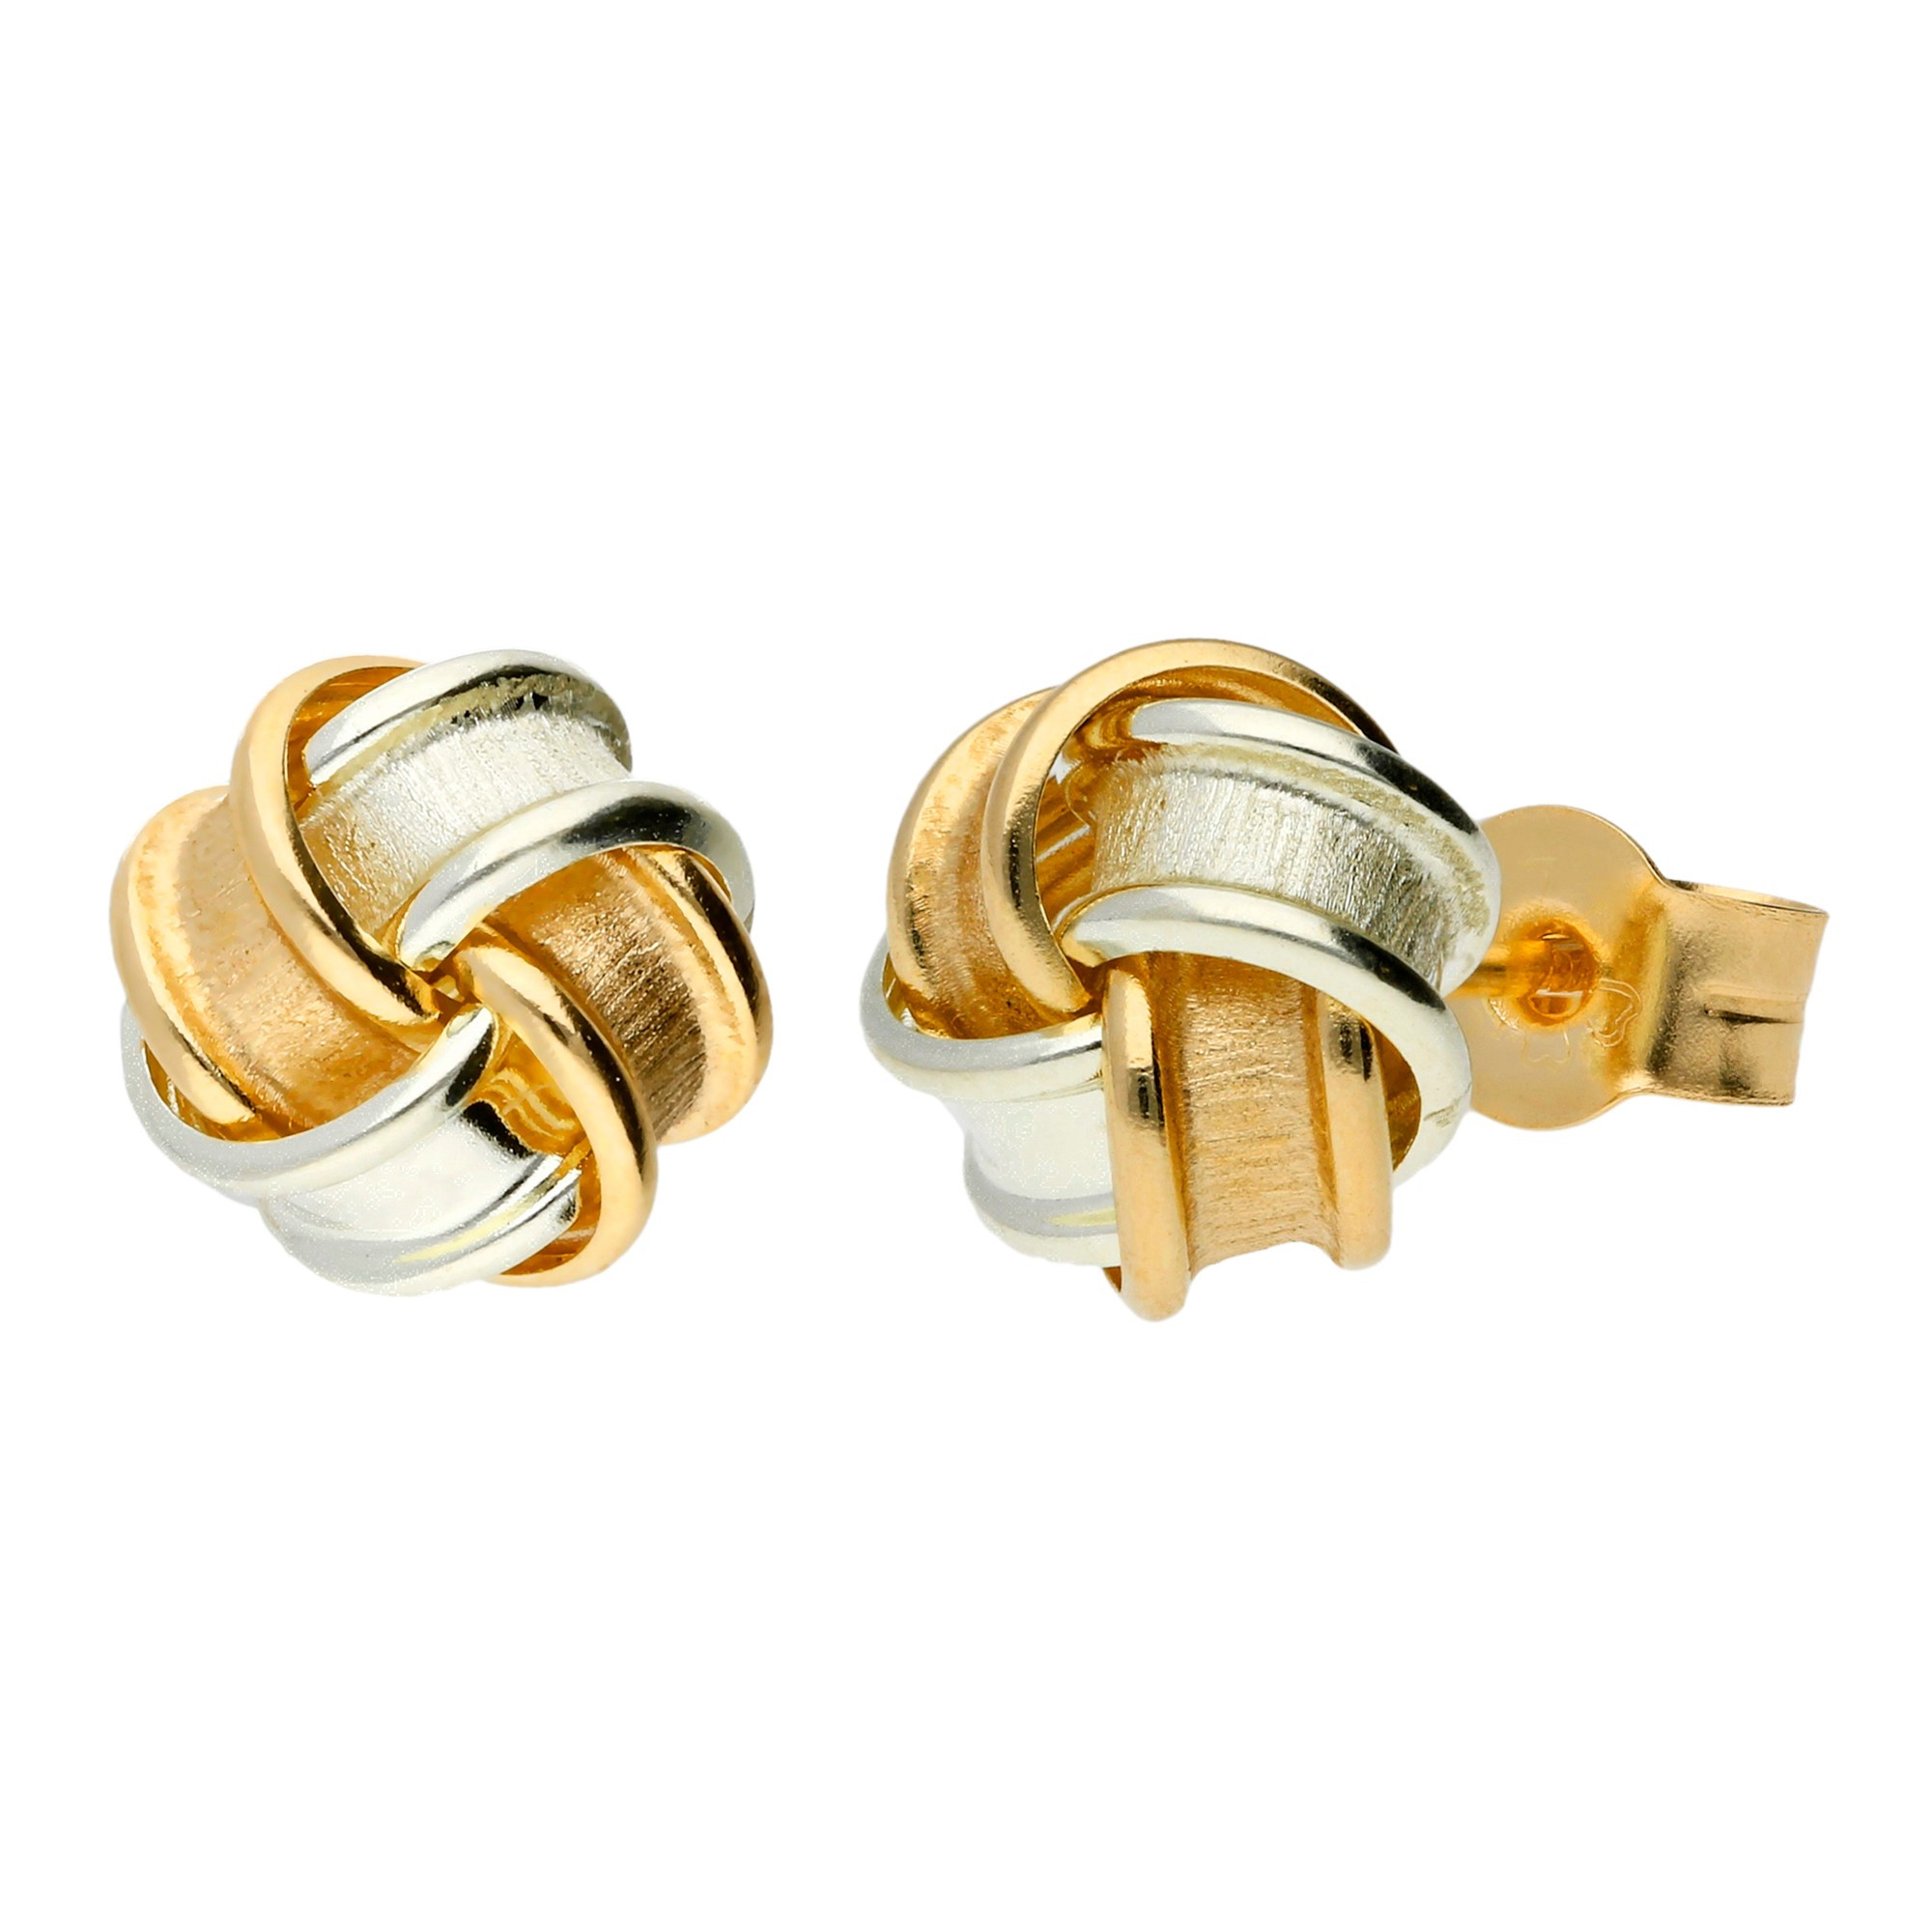 9ct Yellow & White Gold Knot Earrings | Buy Online | Free Insured UK ...